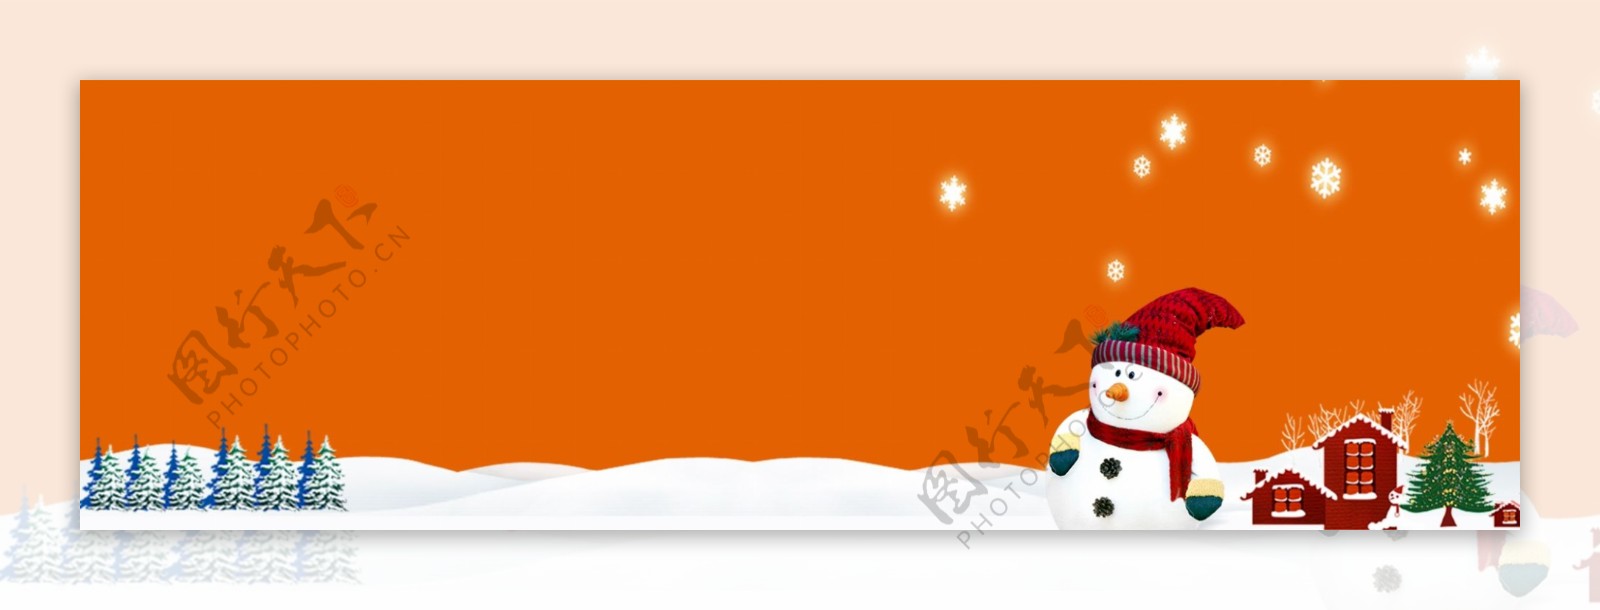 圣诞节雪人橙色banner背景